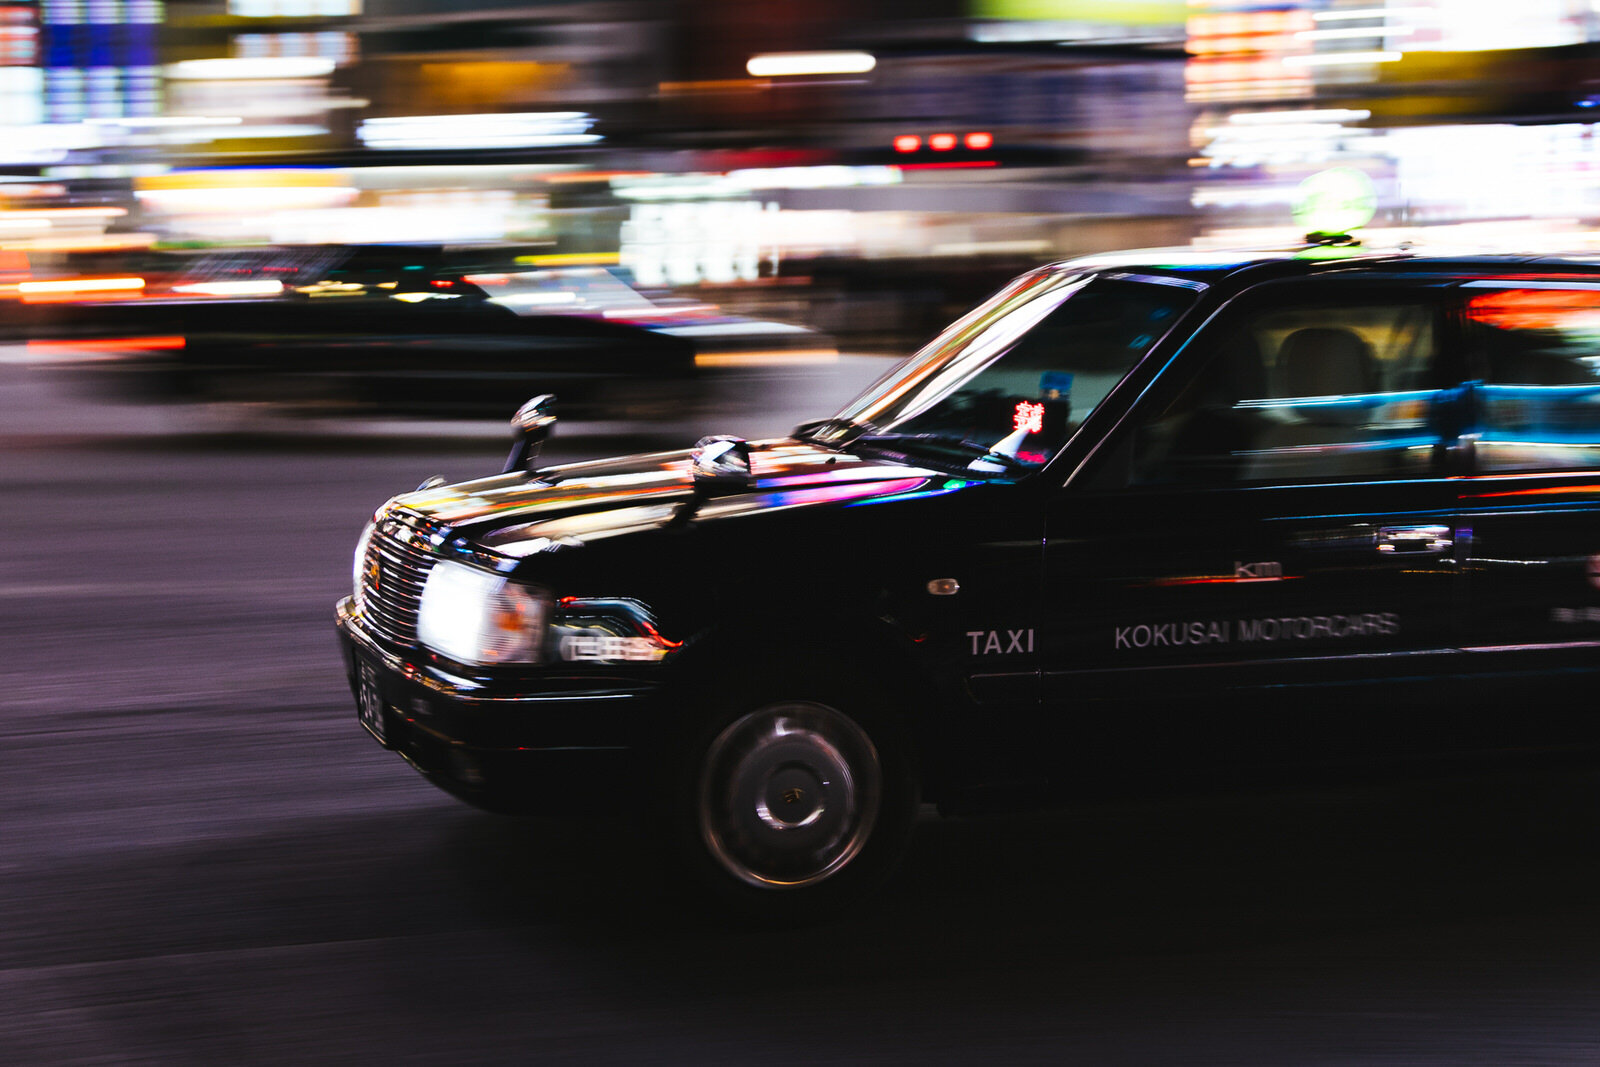 panning-tokyo-taxis.jpg